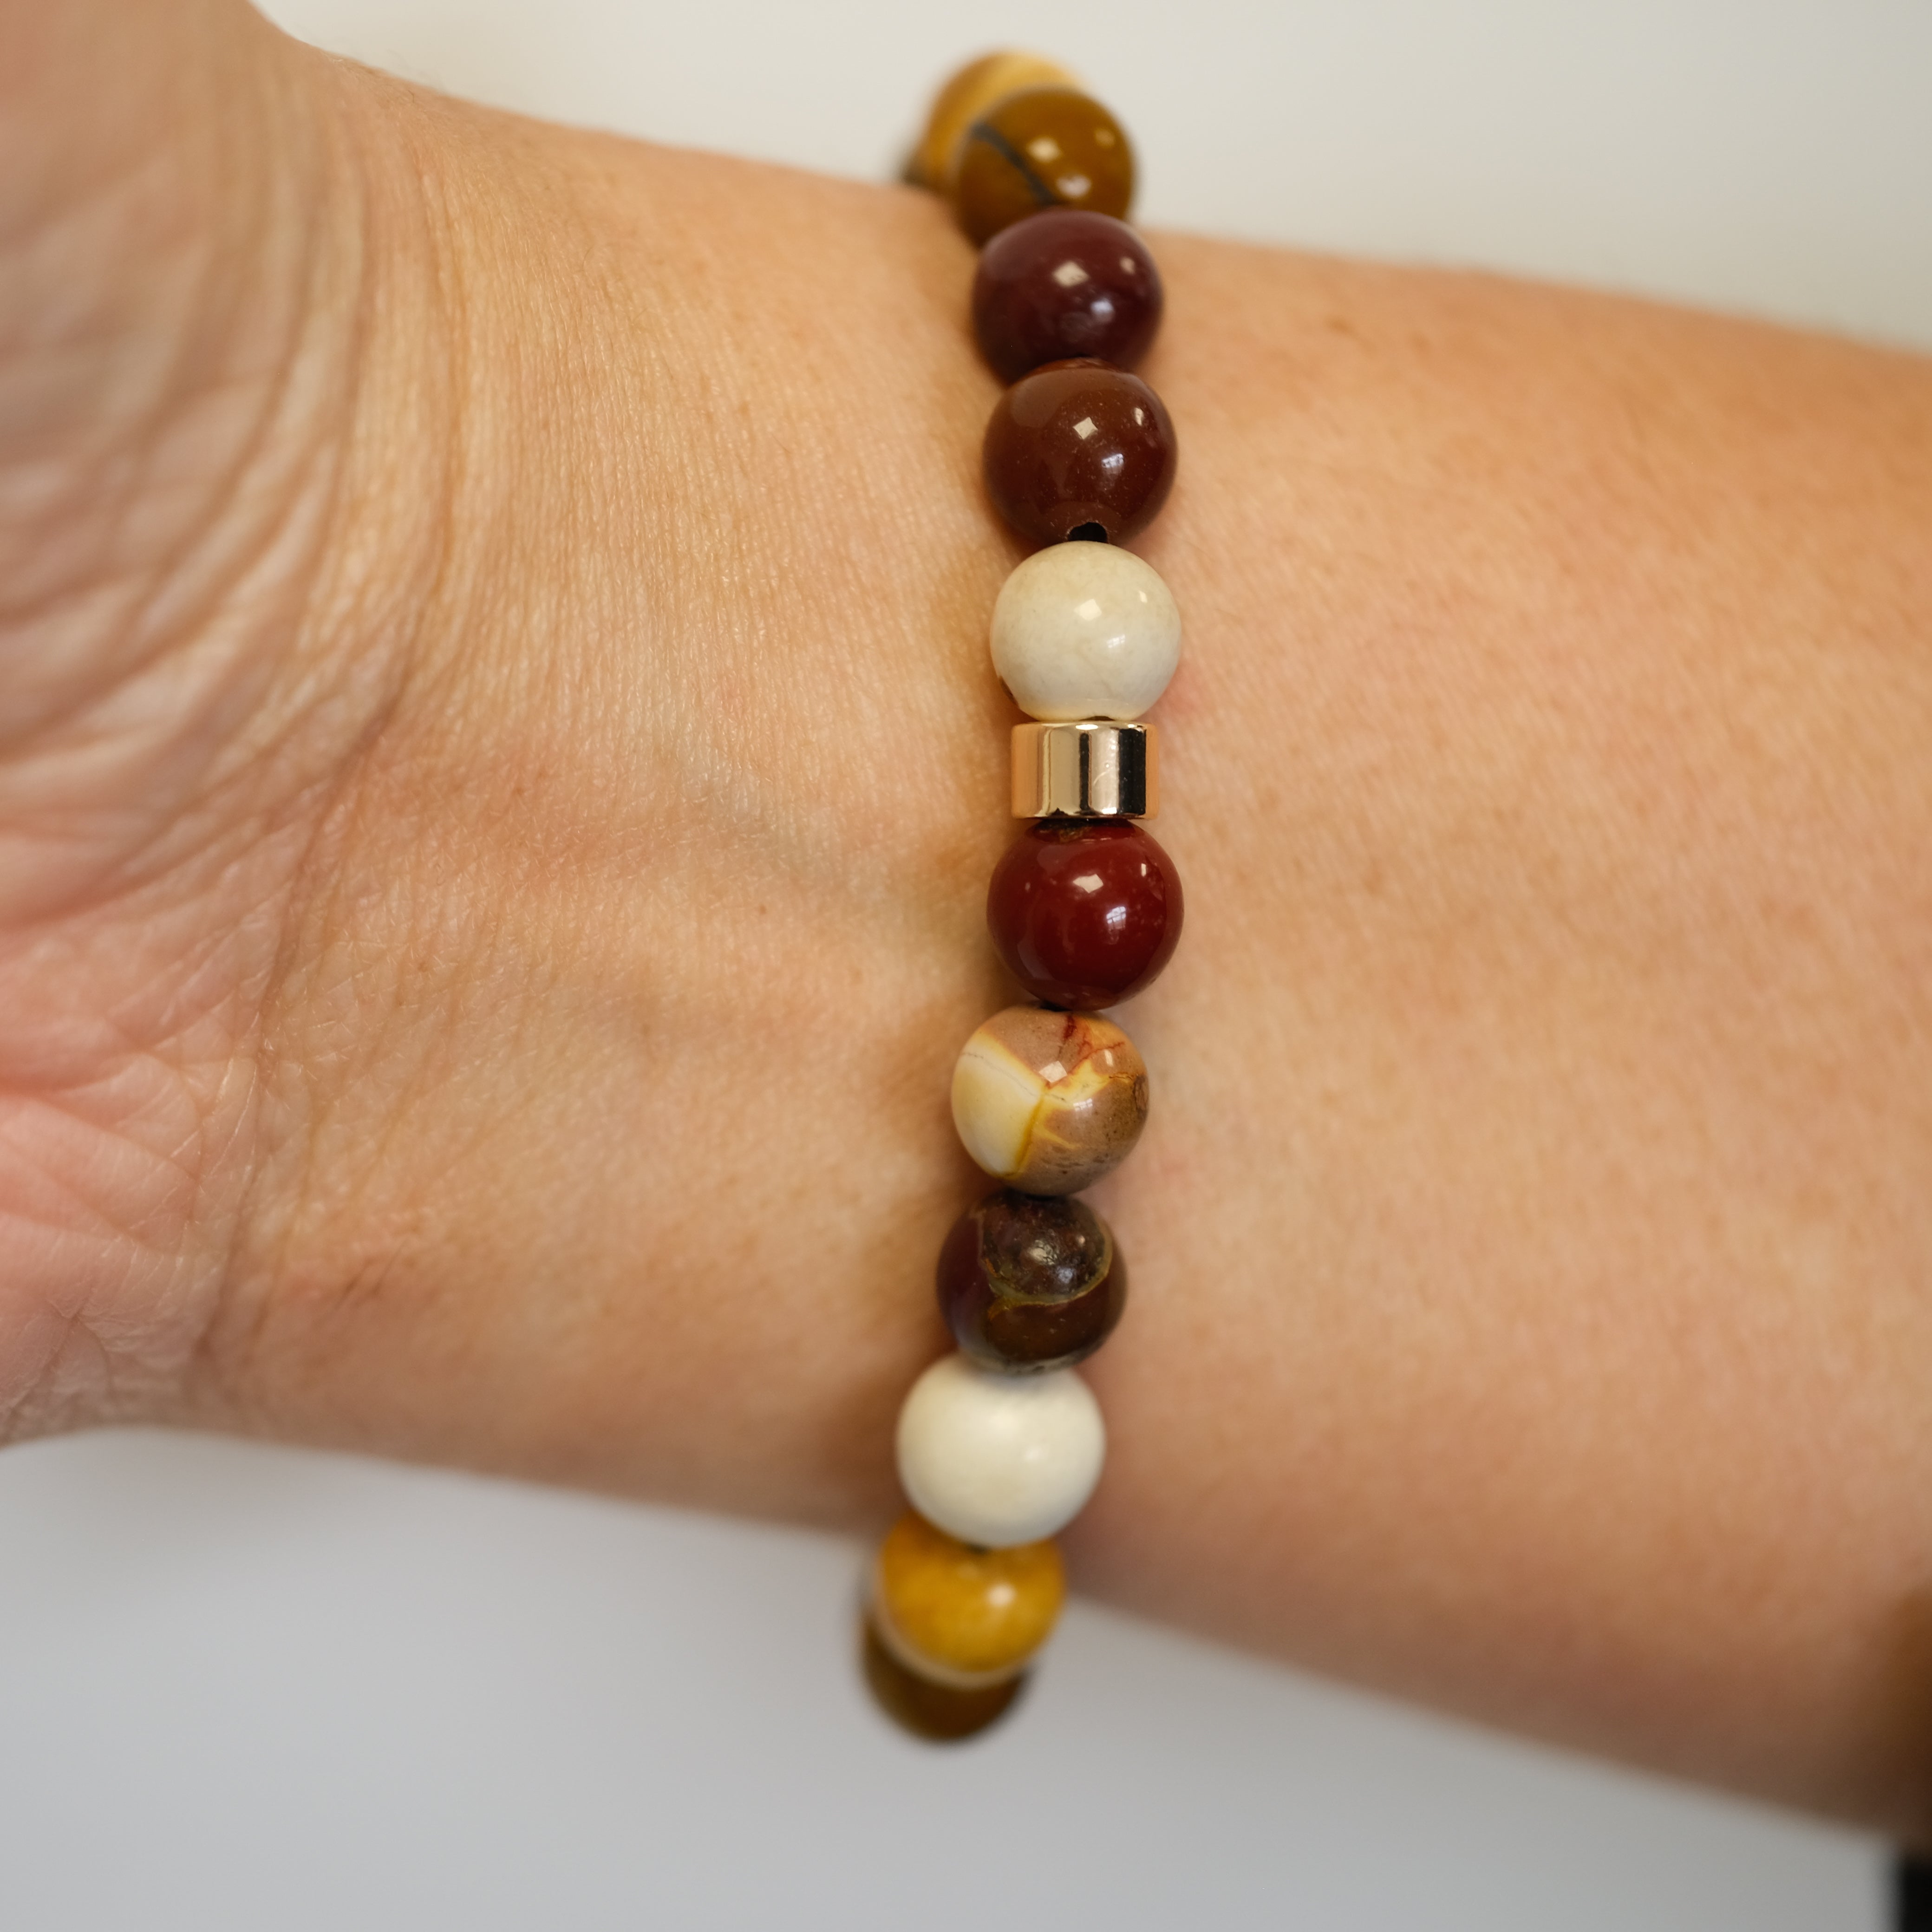 A mookaite gemstone bracelet worn on a model's wrist from behind